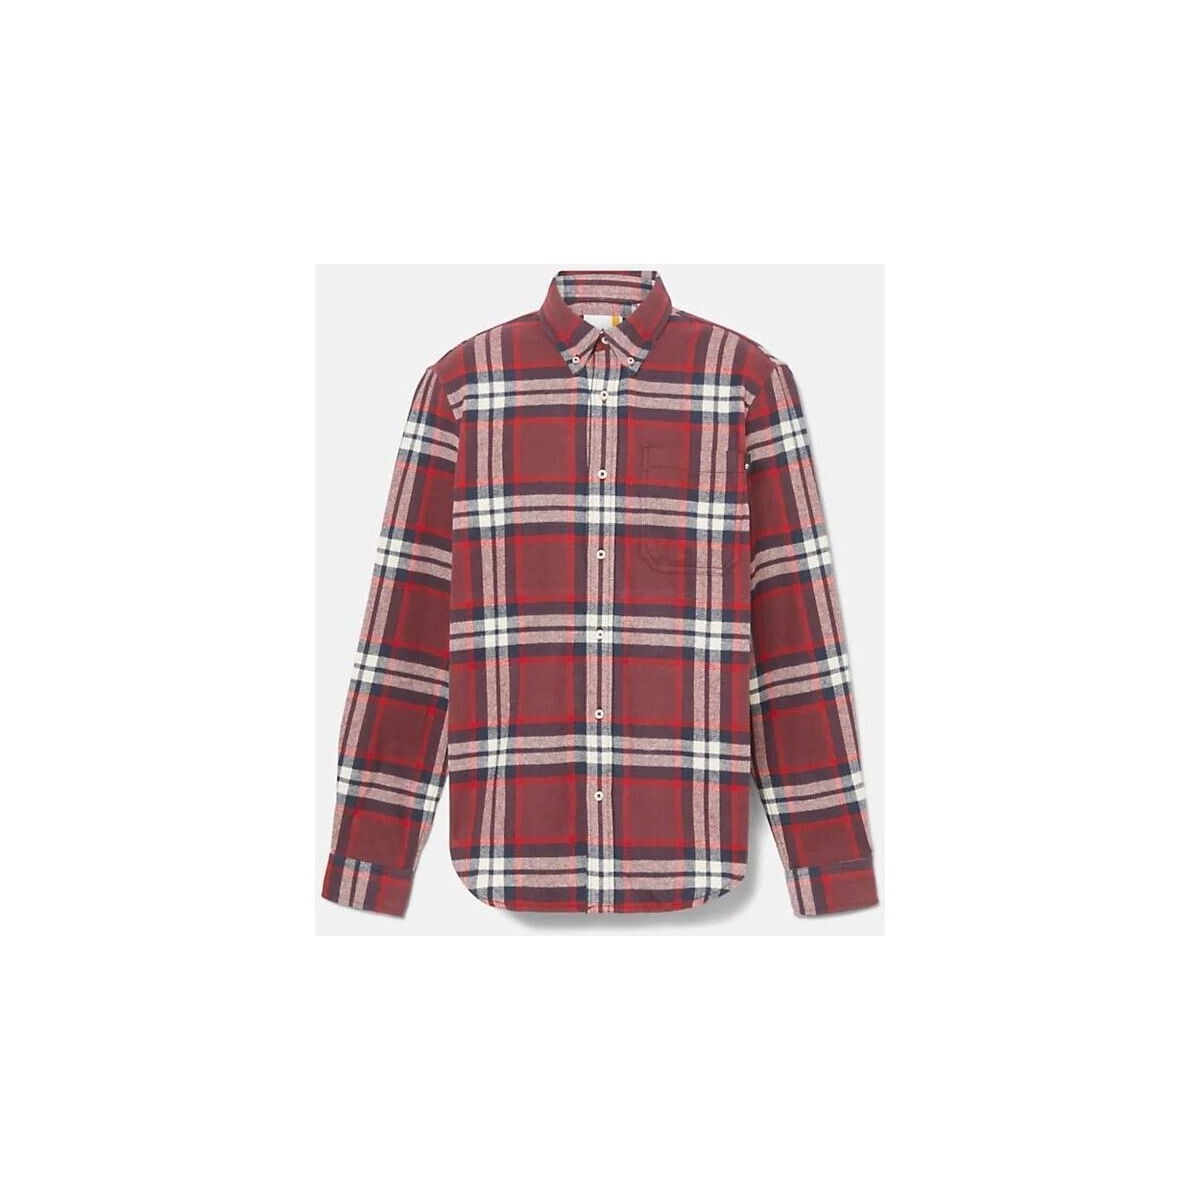 Kleidung Herren Langärmelige Hemden Timberland TB0A6GKH HEAVY FLANNEL PLAID-J60 PORTR Rot